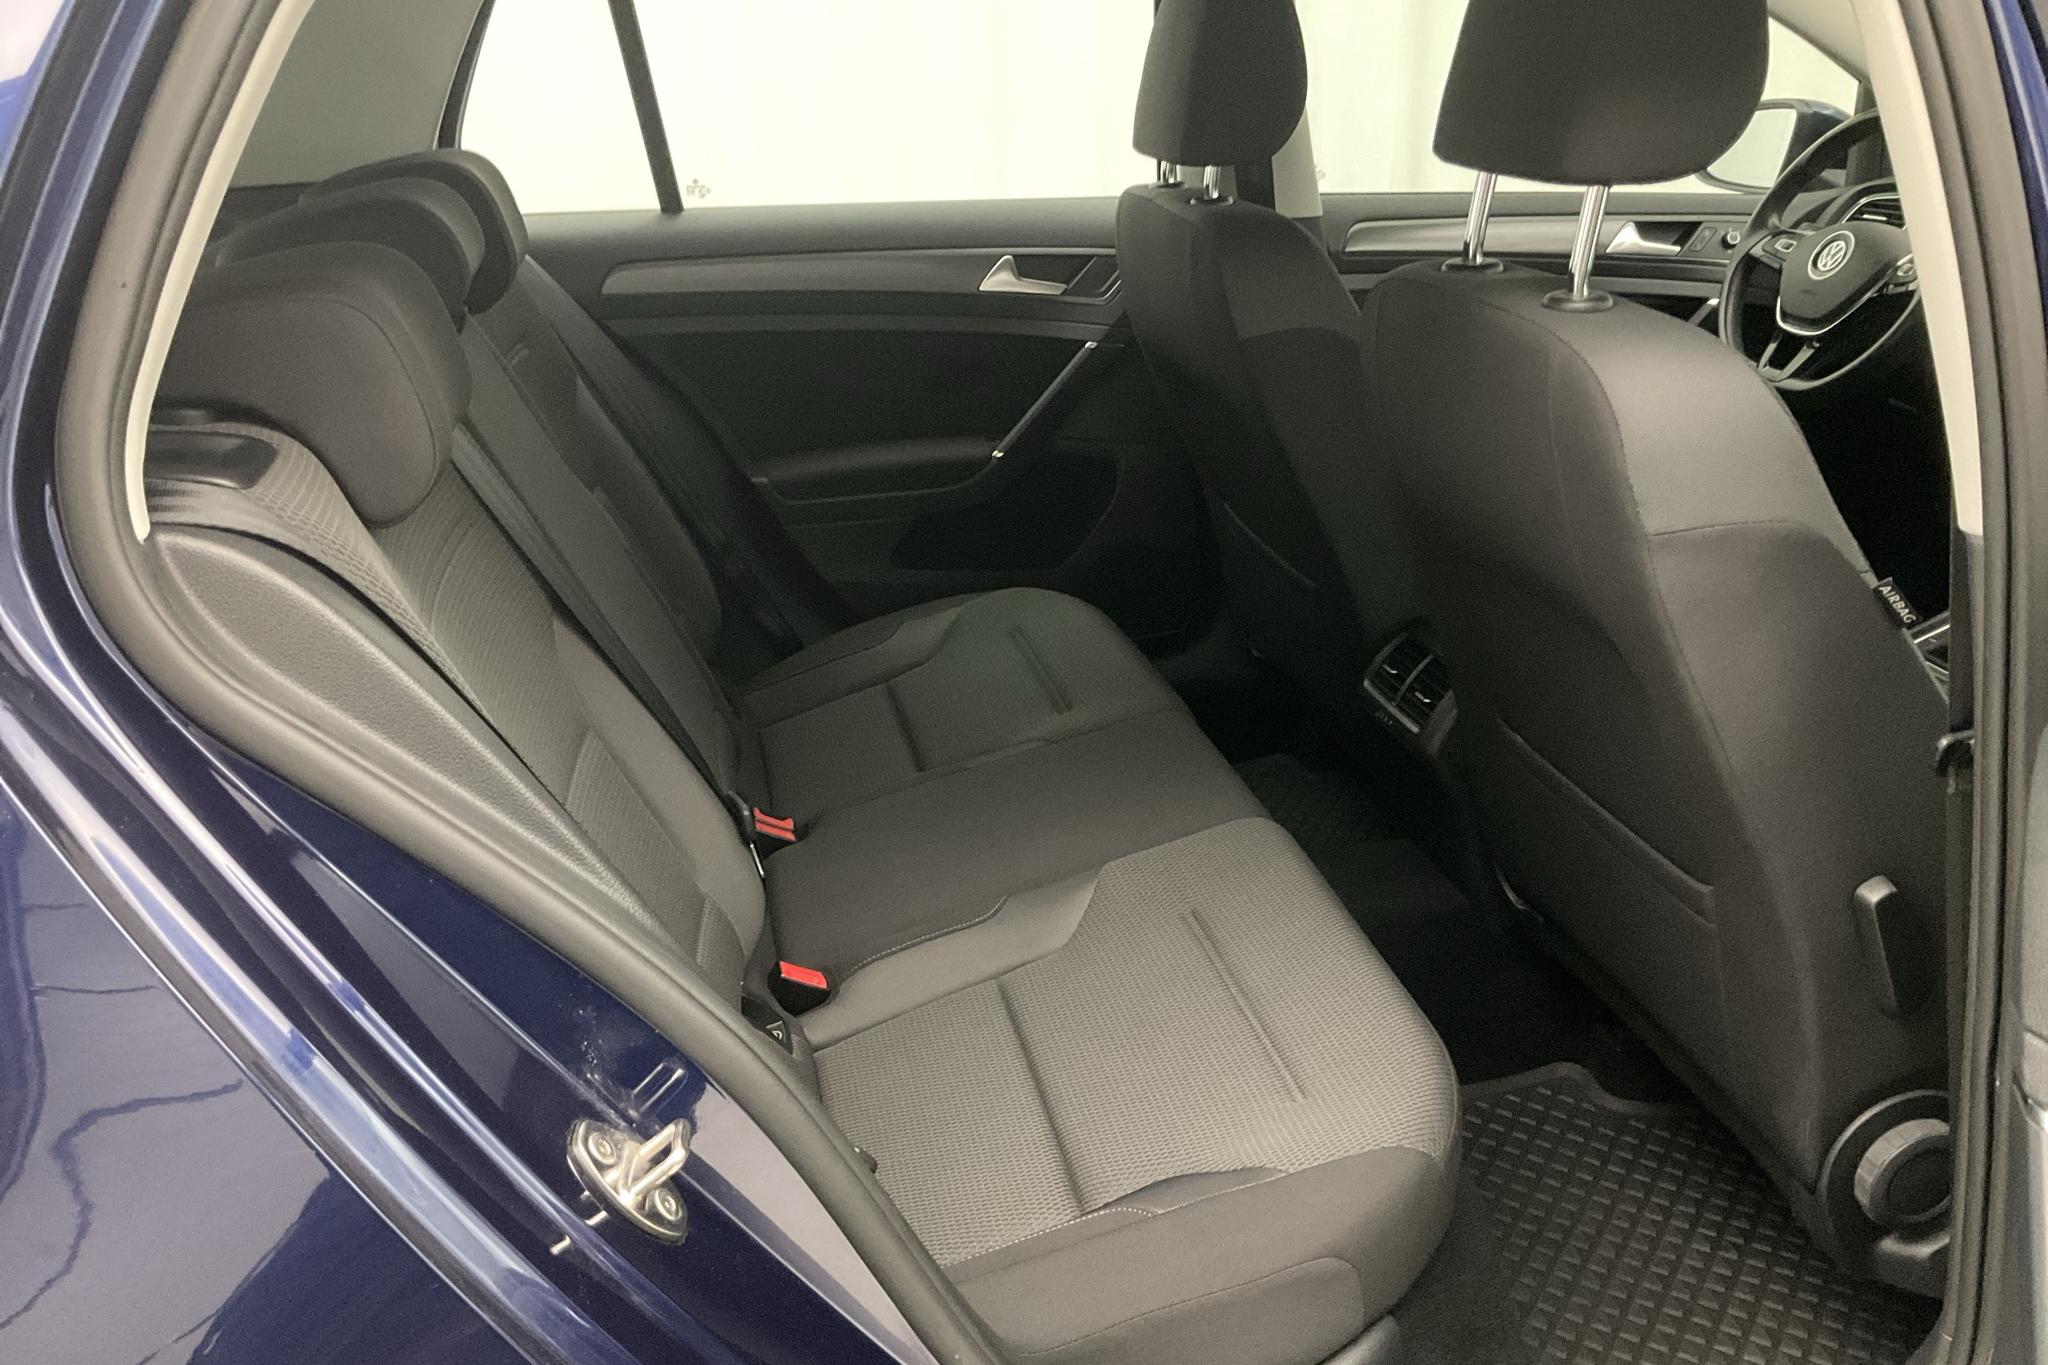 VW Golf VII 1.0 TSI 5dr (110hk) - 7 572 mil - Manuell - Dark Blue - 2017